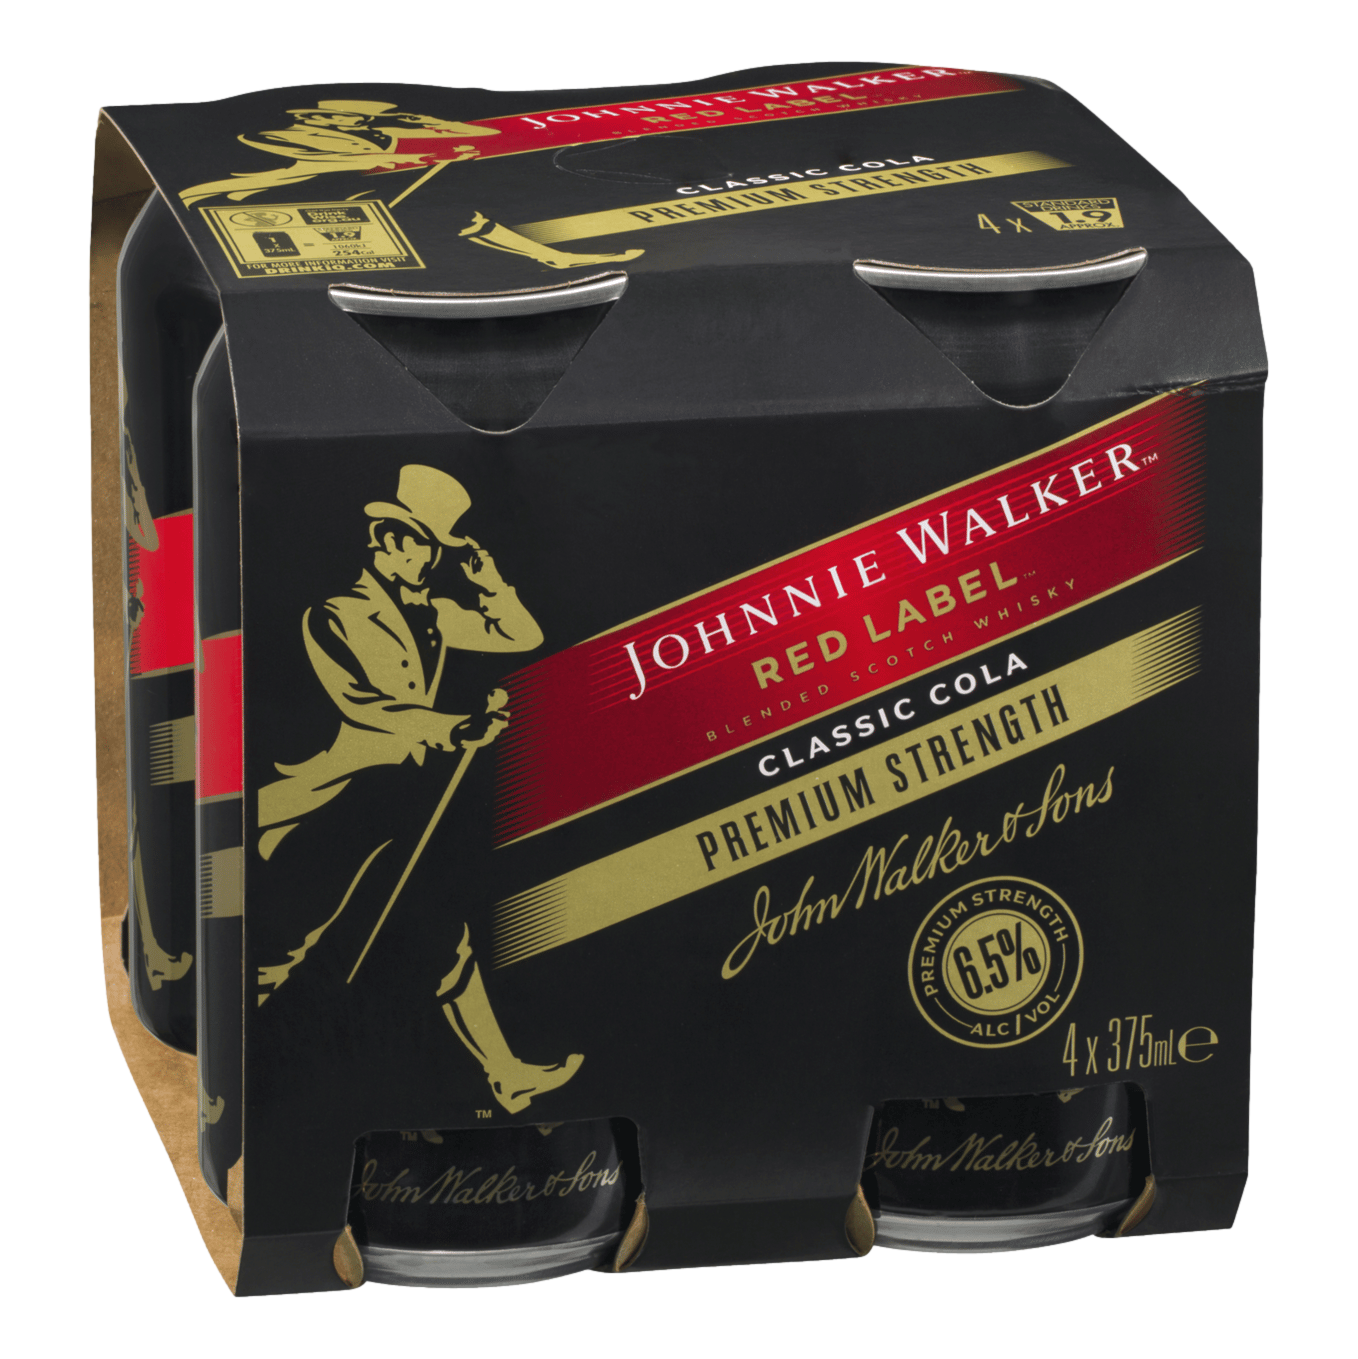 Johnnie Walker Premium Strength & Cola 6.5% 375ml Can 4 Pack